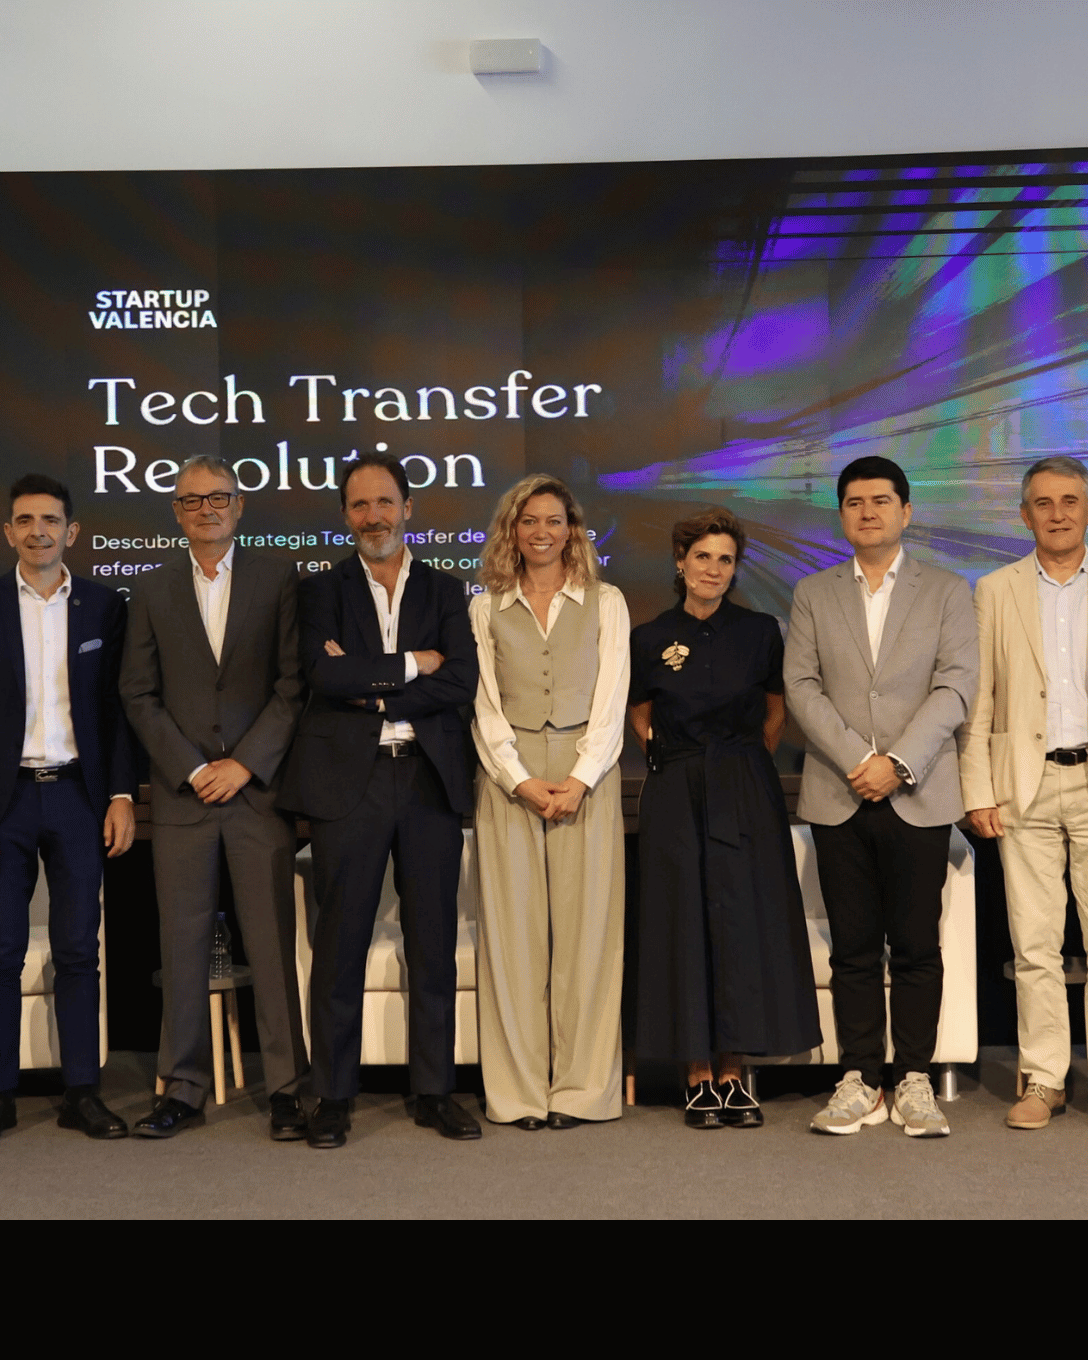 tech transfer